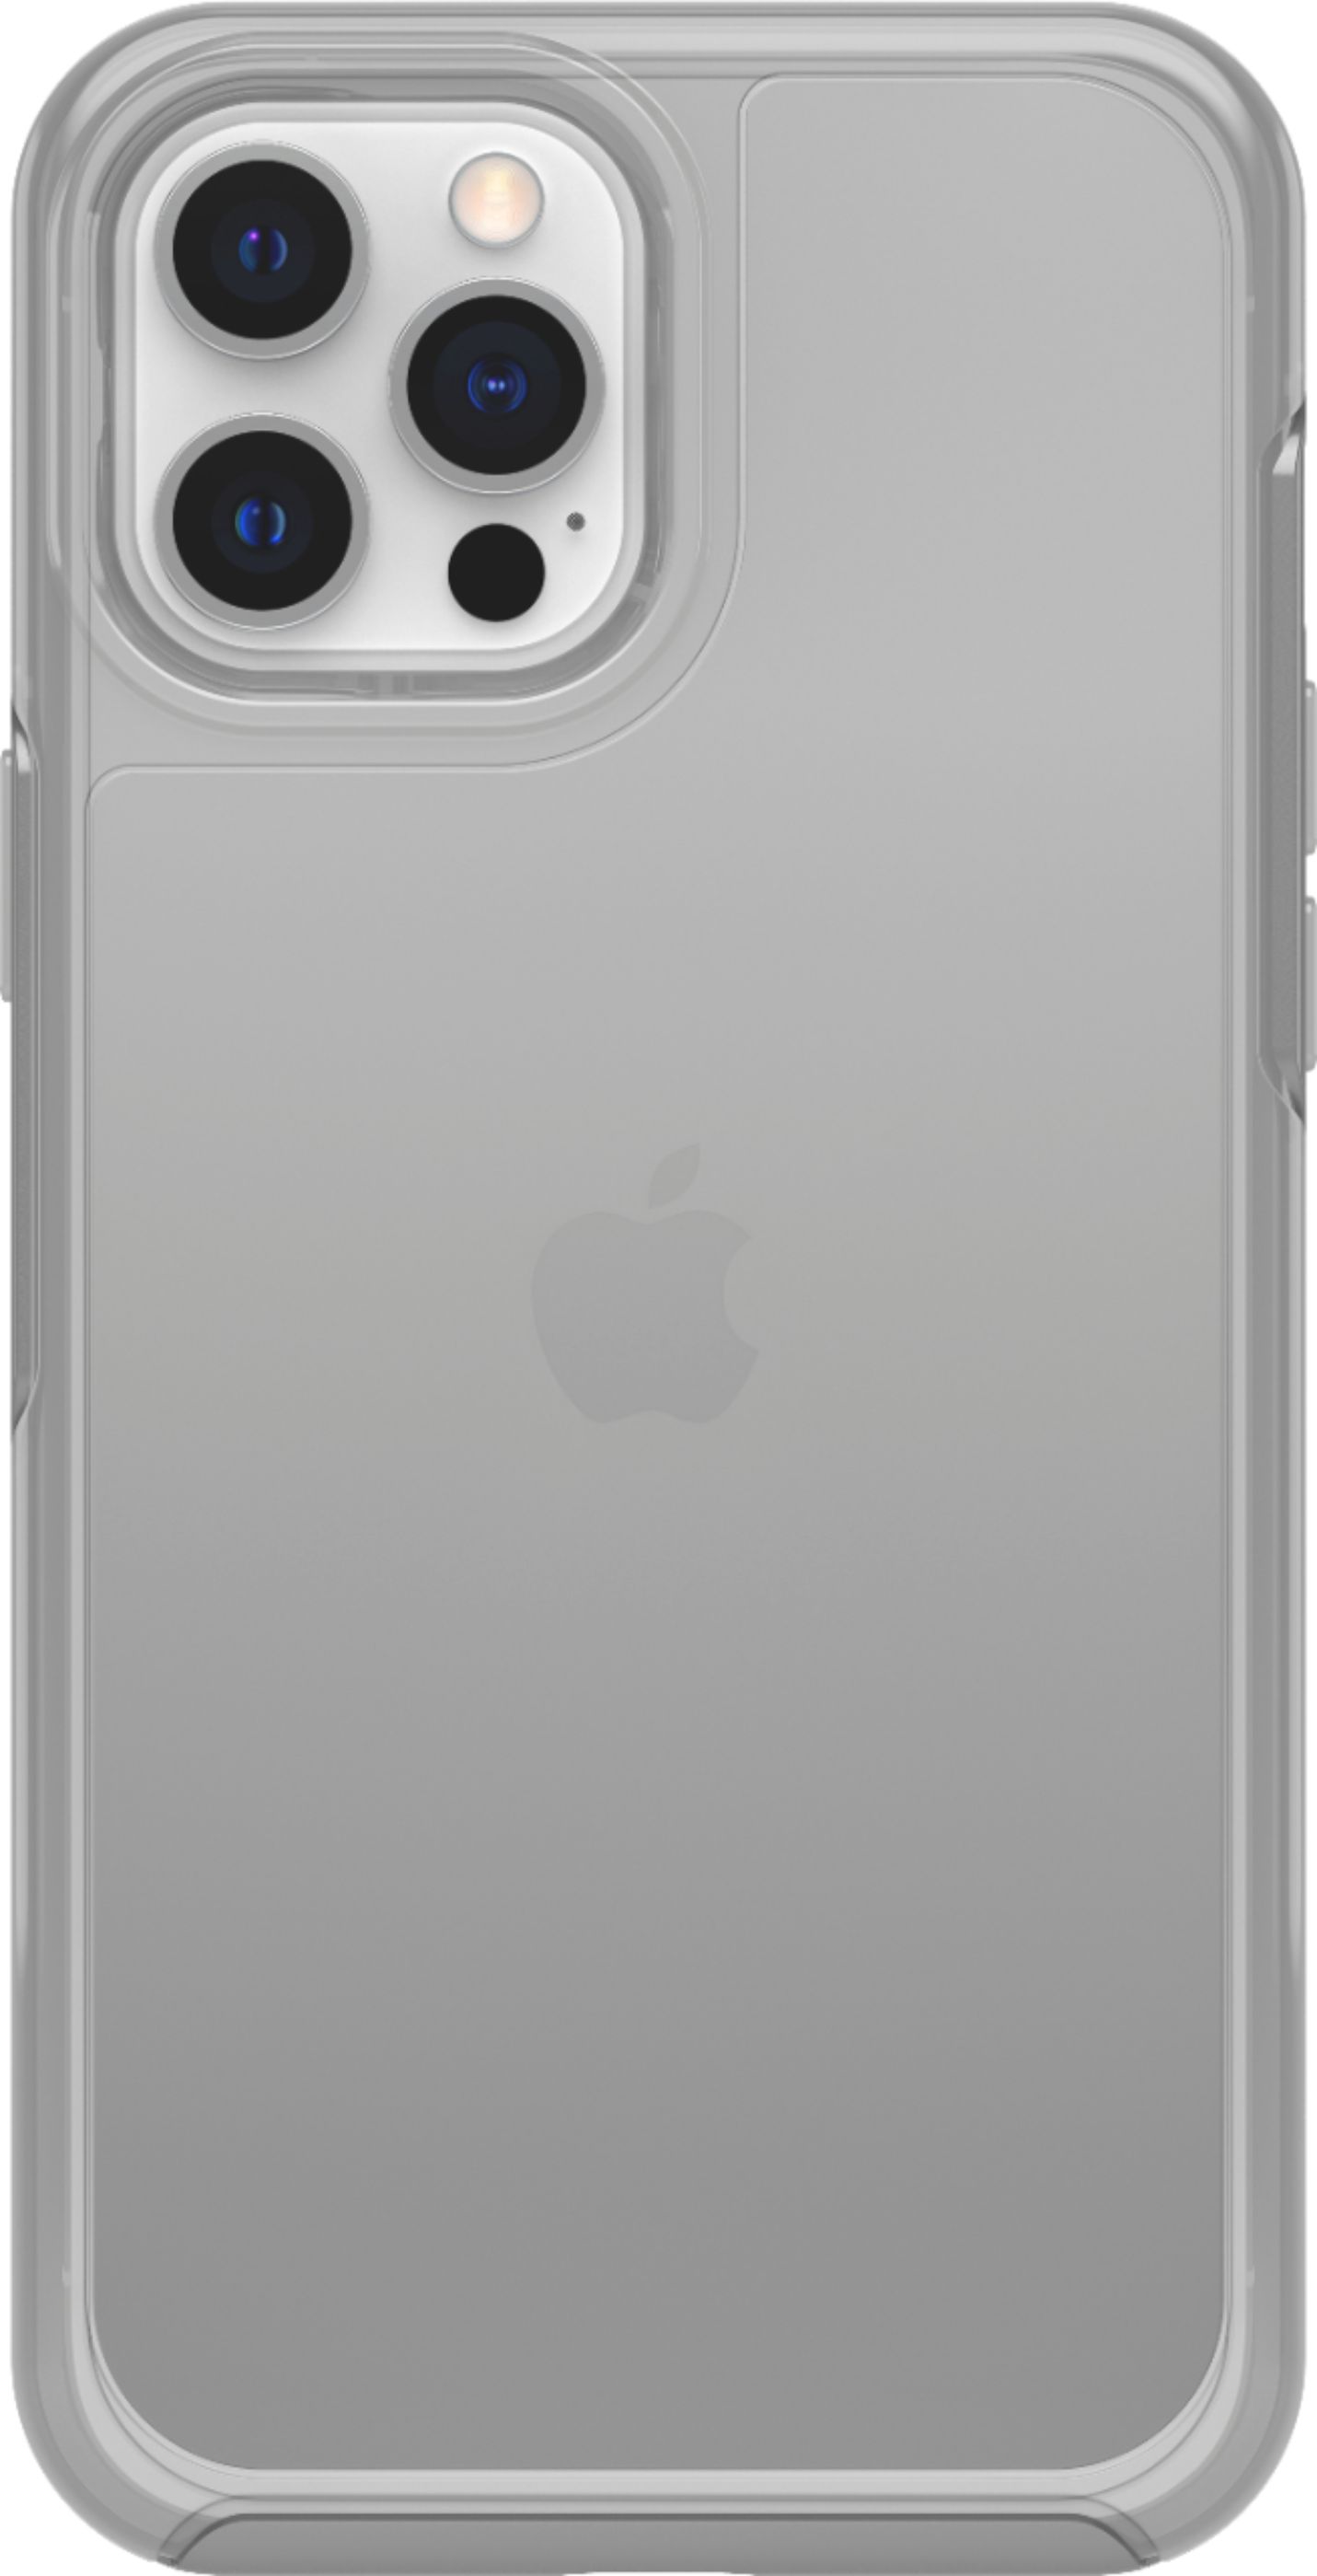 University of Louisville OtterBox Phone Case Symmetry / iPhone 12 Mini